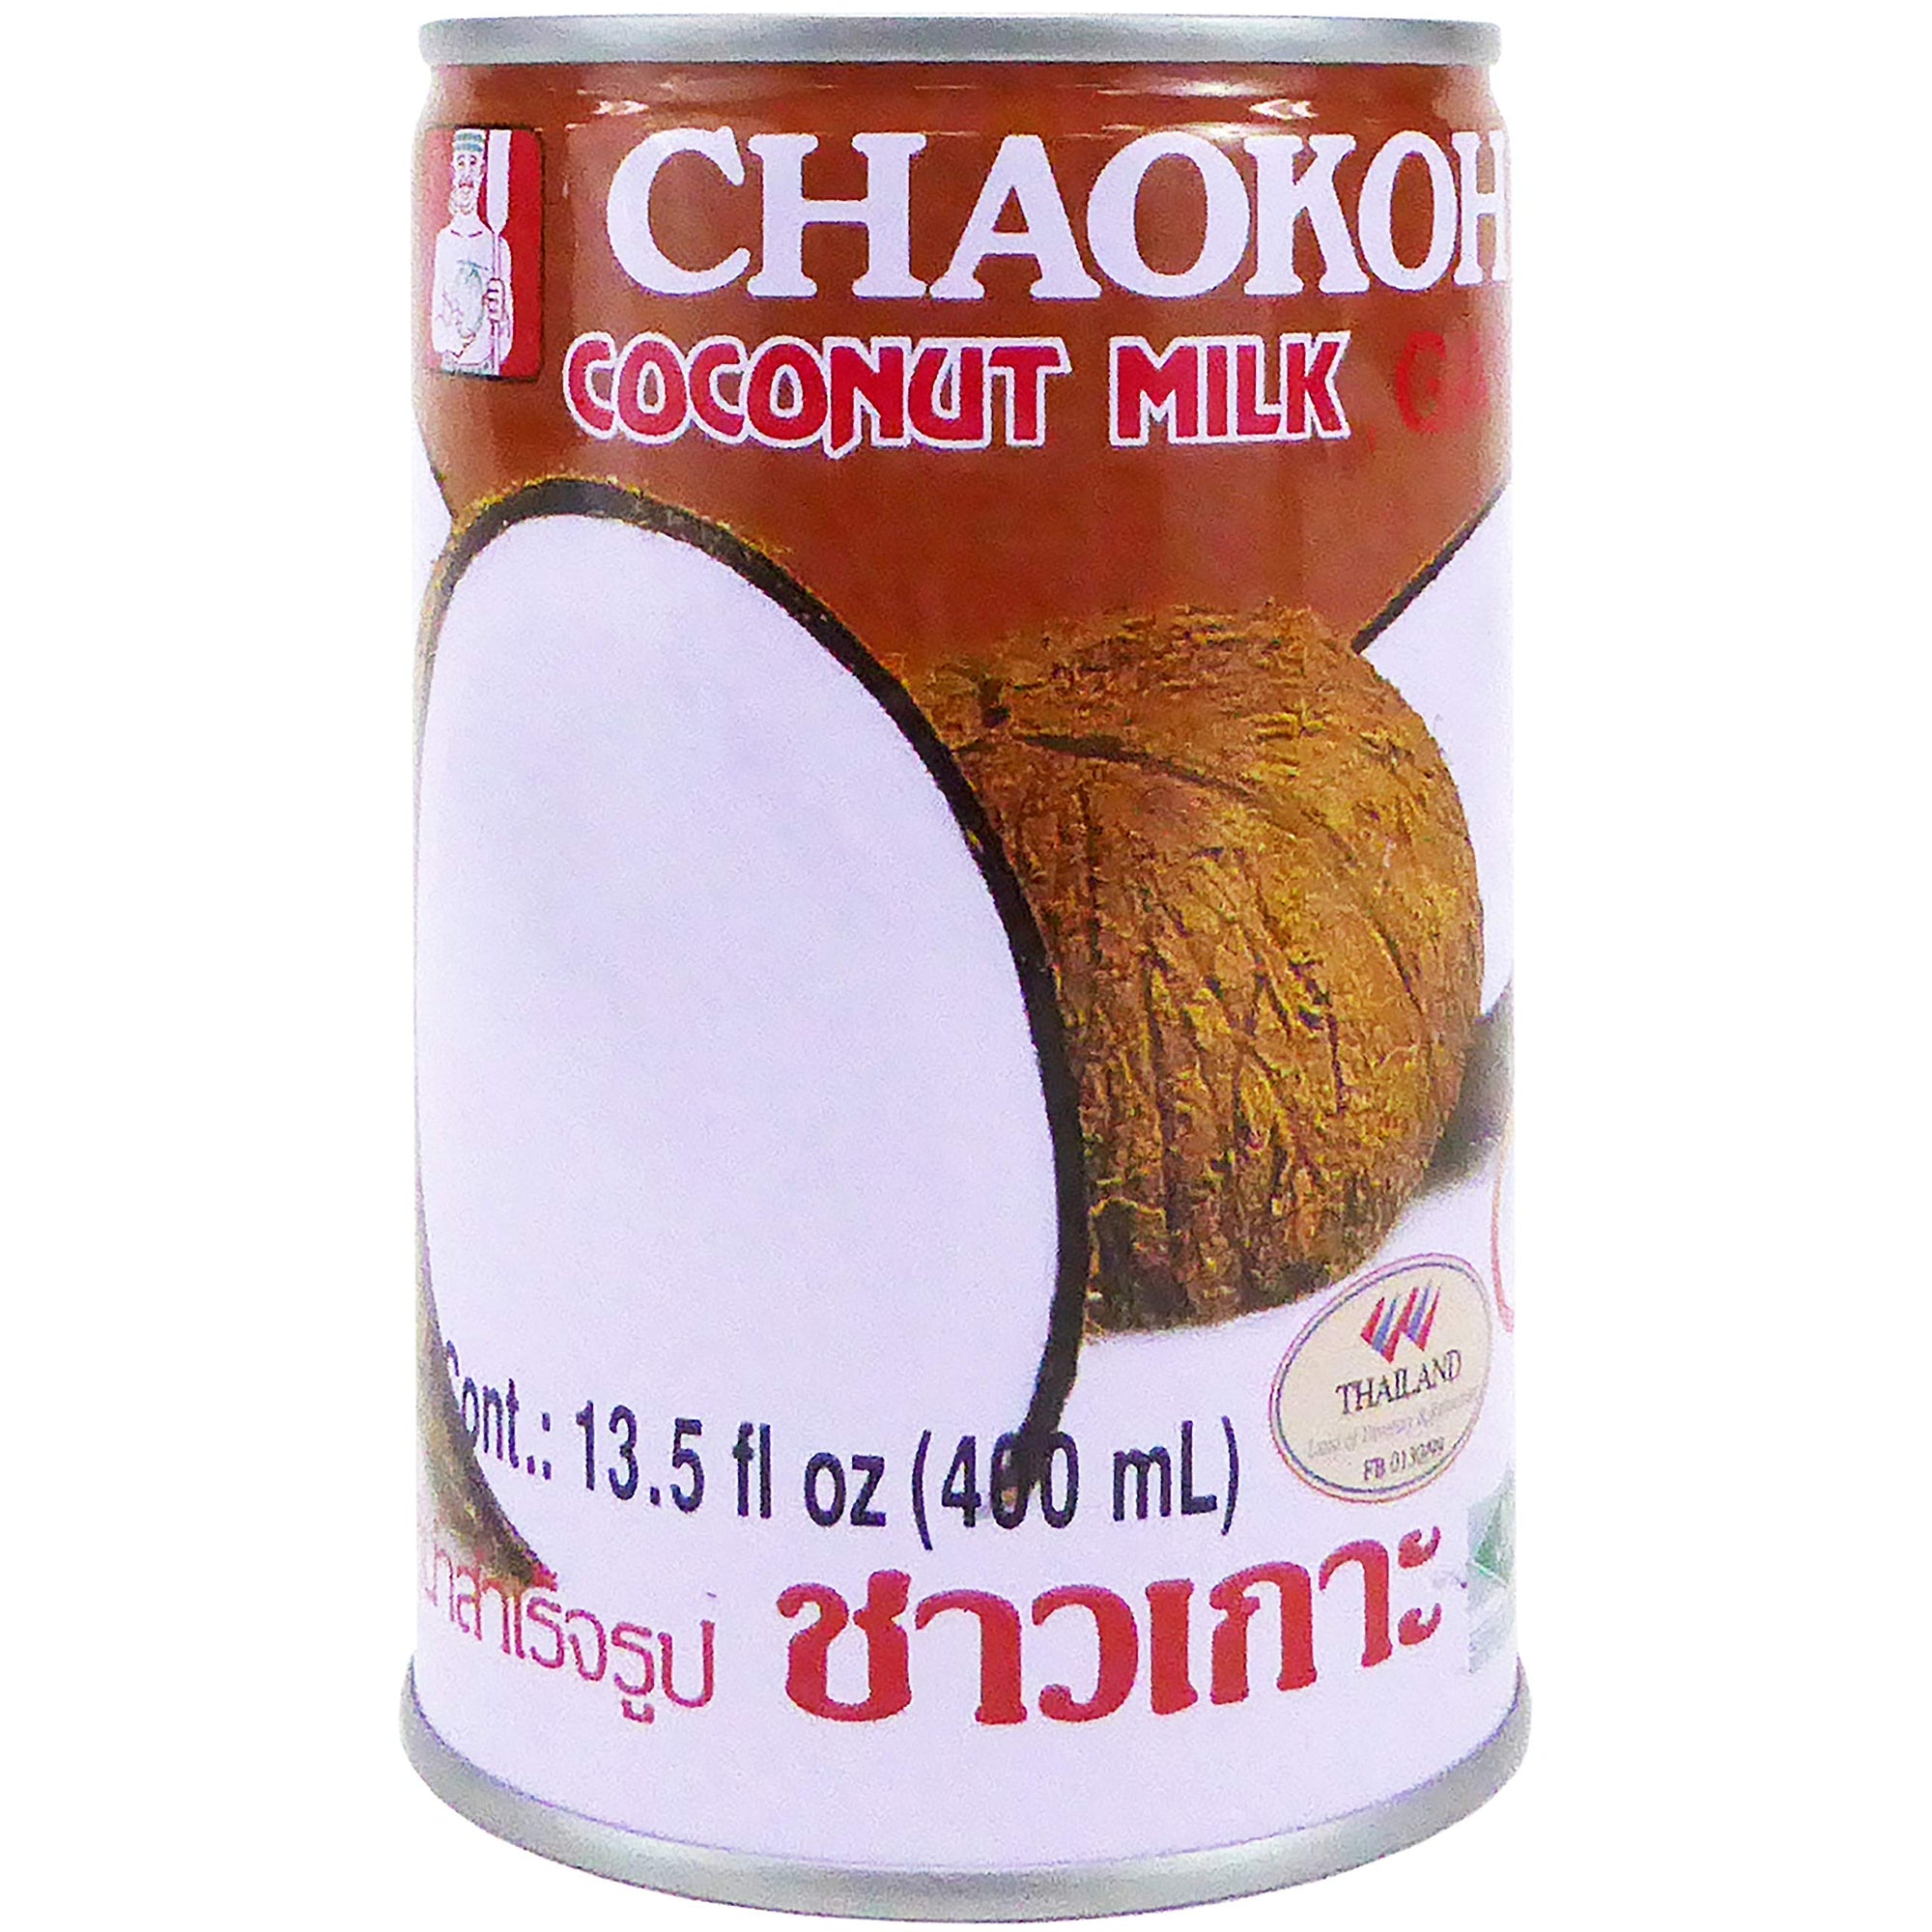 CHAOKOH COCONUT MILK CAN